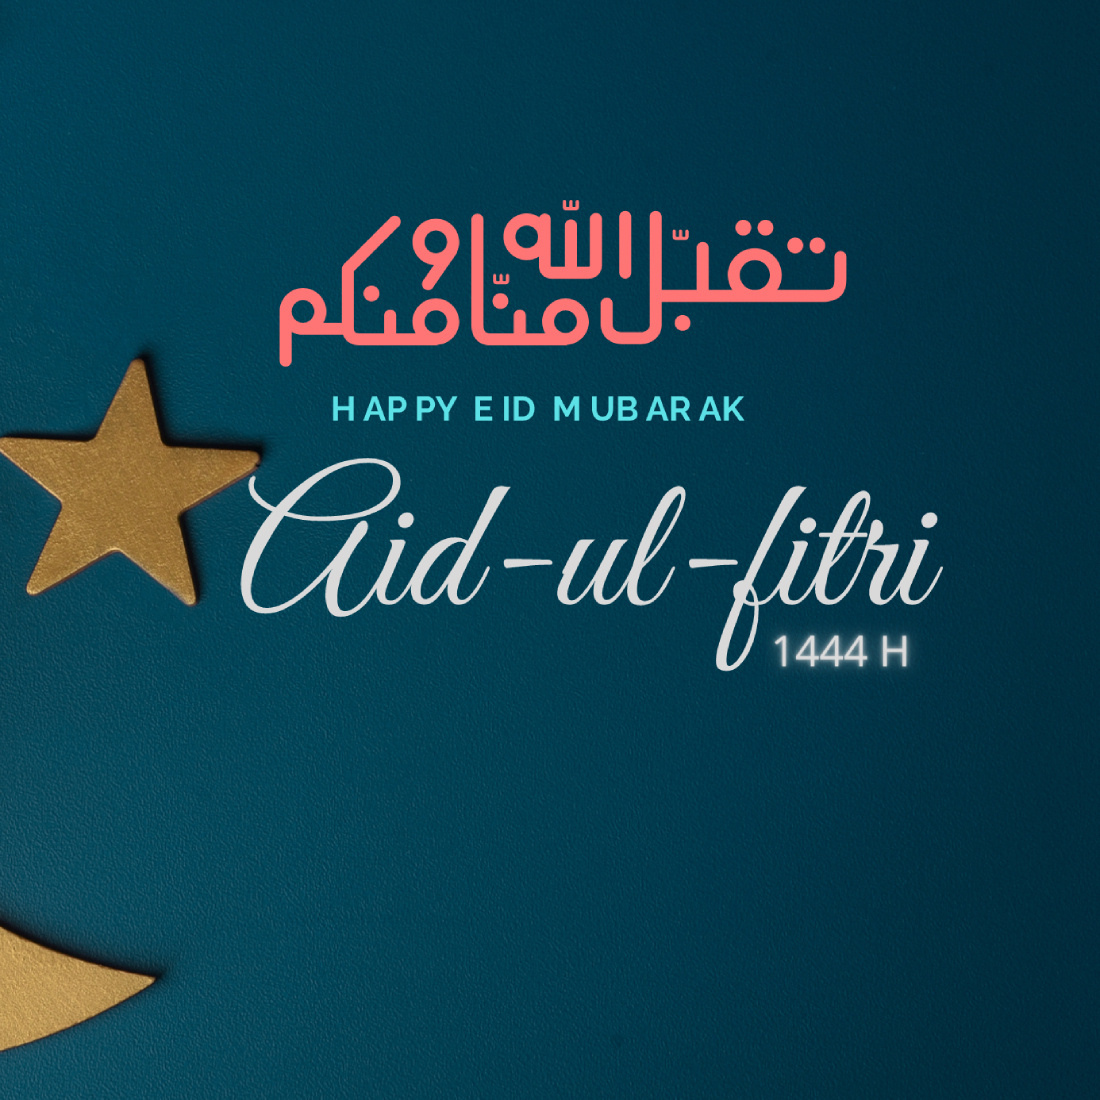 Eid Mubarak Editable Template for Social Media Post cover image.